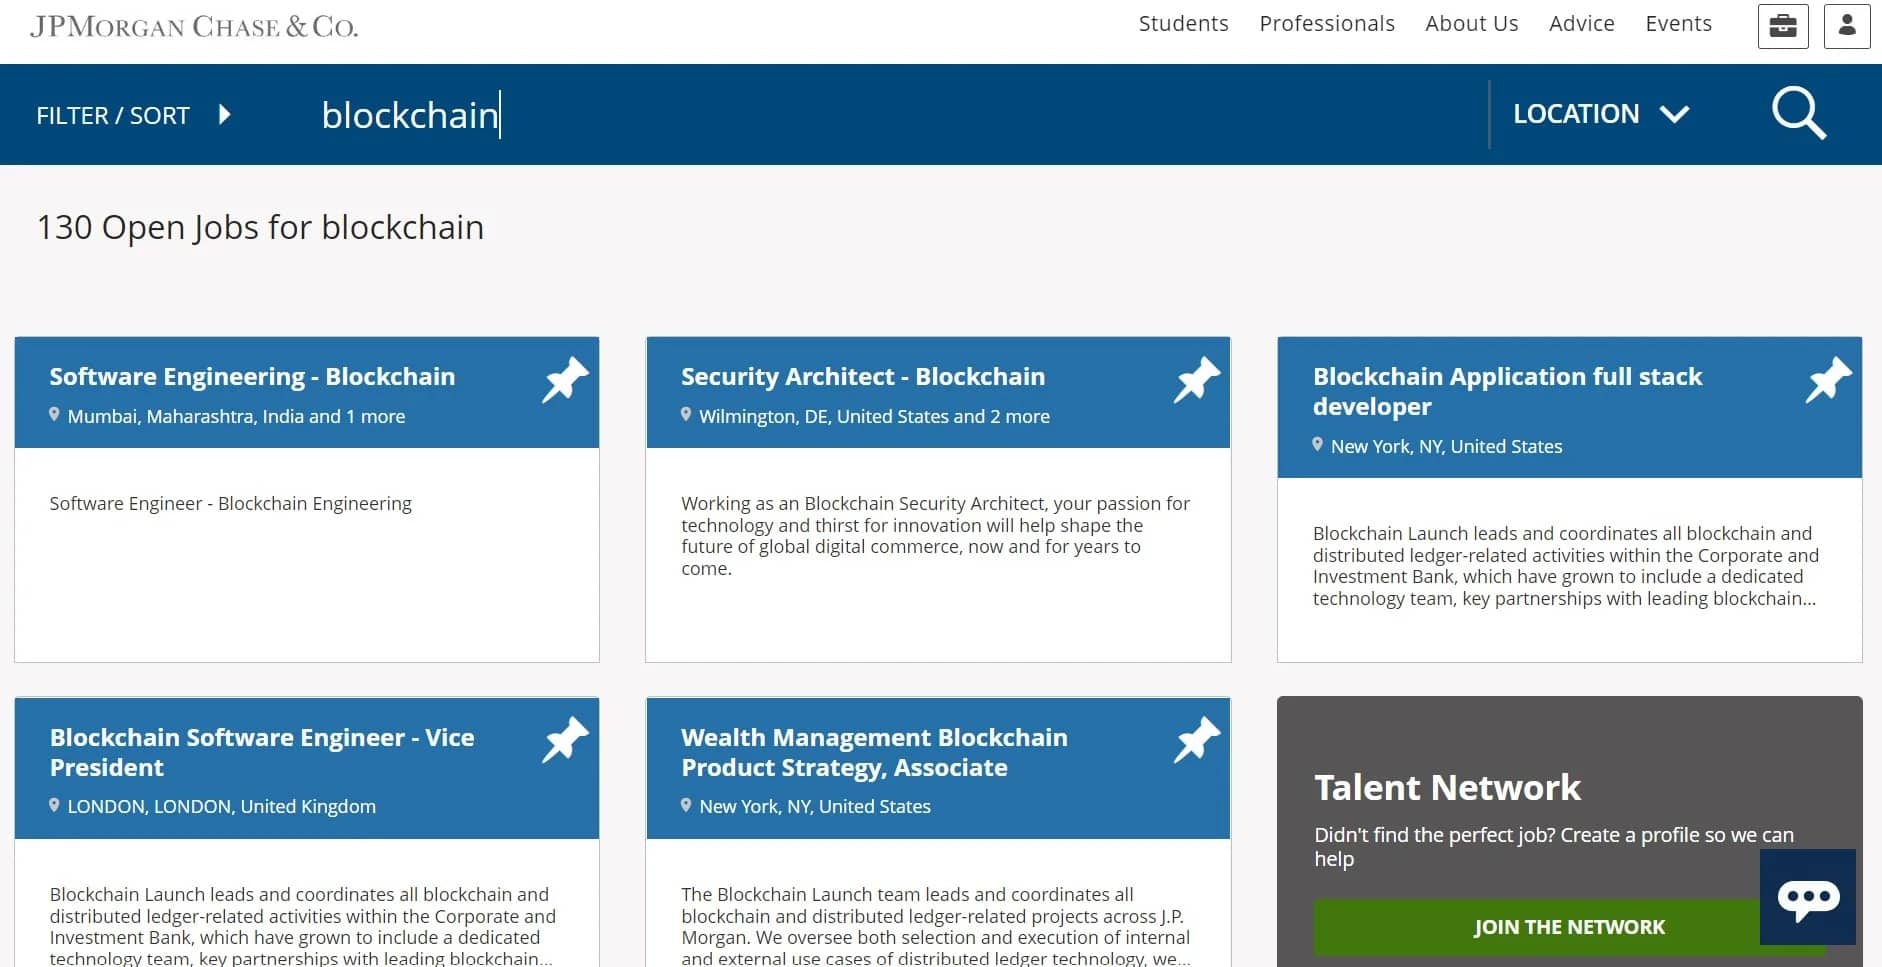 Blockchain-related recruitments at JP Morgan Chase